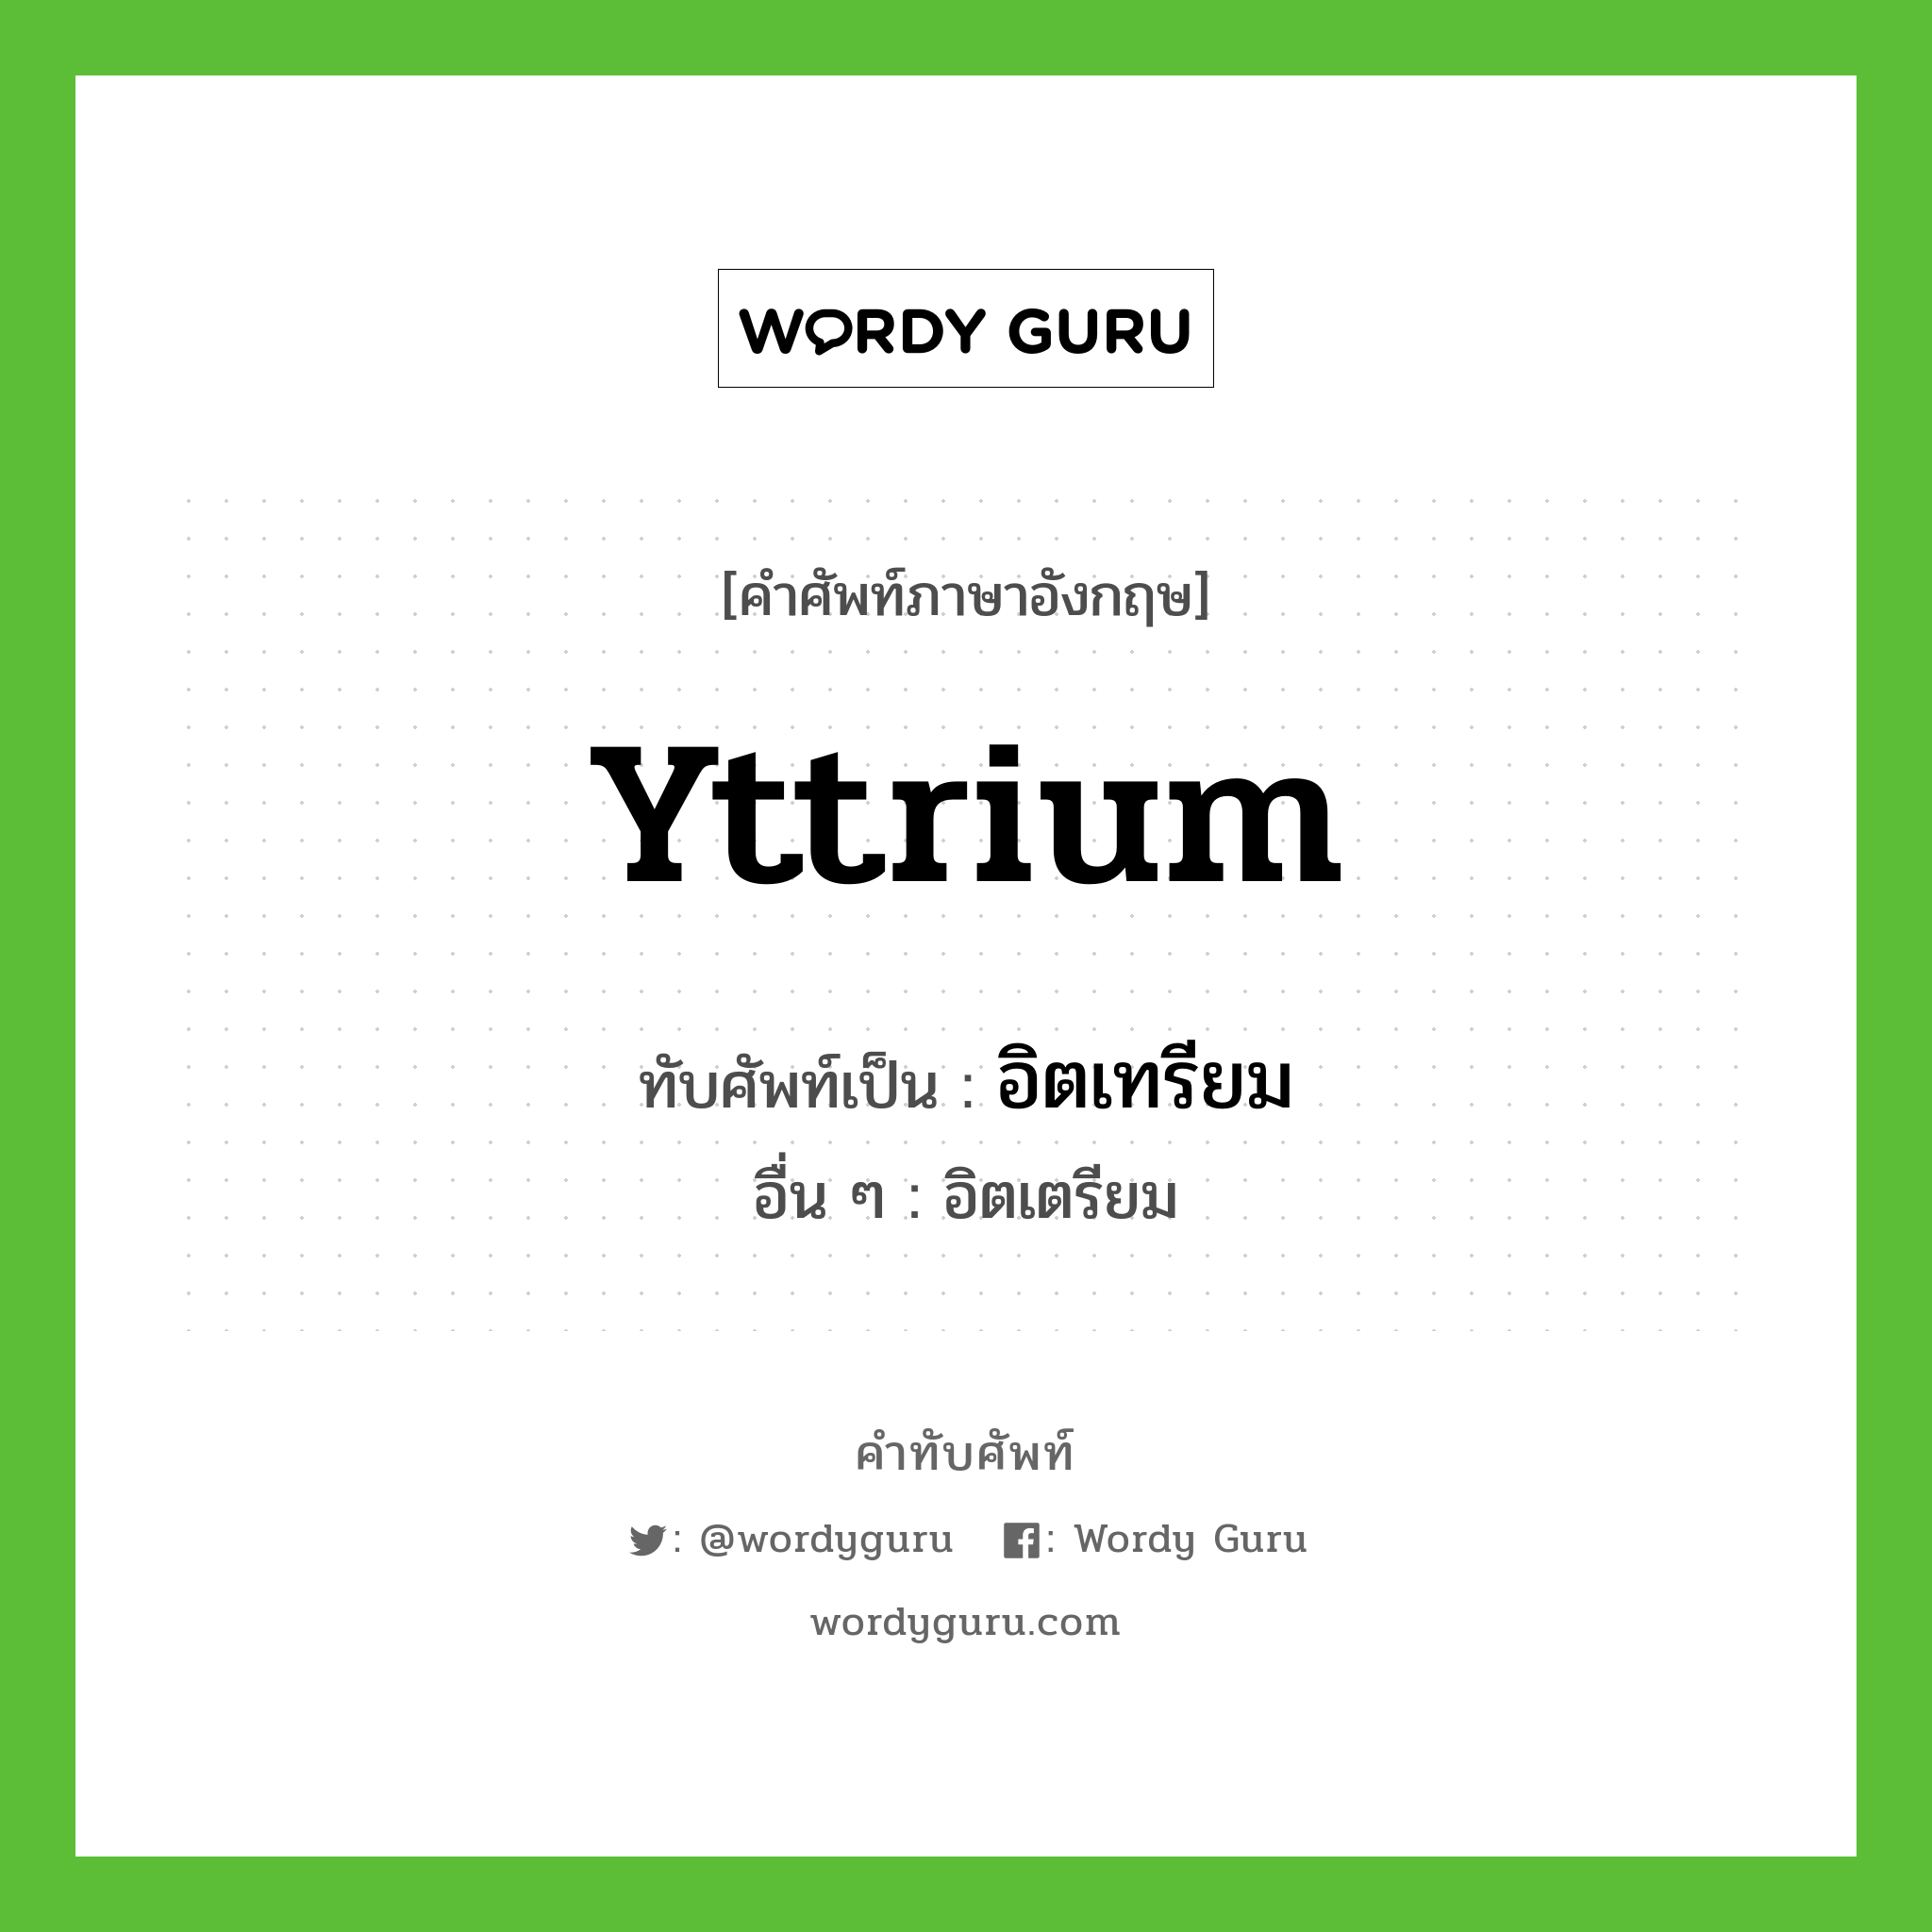 yttrium เขียนเป็นคำไทยว่าอะไร?, คำศัพท์ภาษาอังกฤษ yttrium ทับศัพท์เป็น อิตเทรียม อื่น ๆ อิตเตรียม